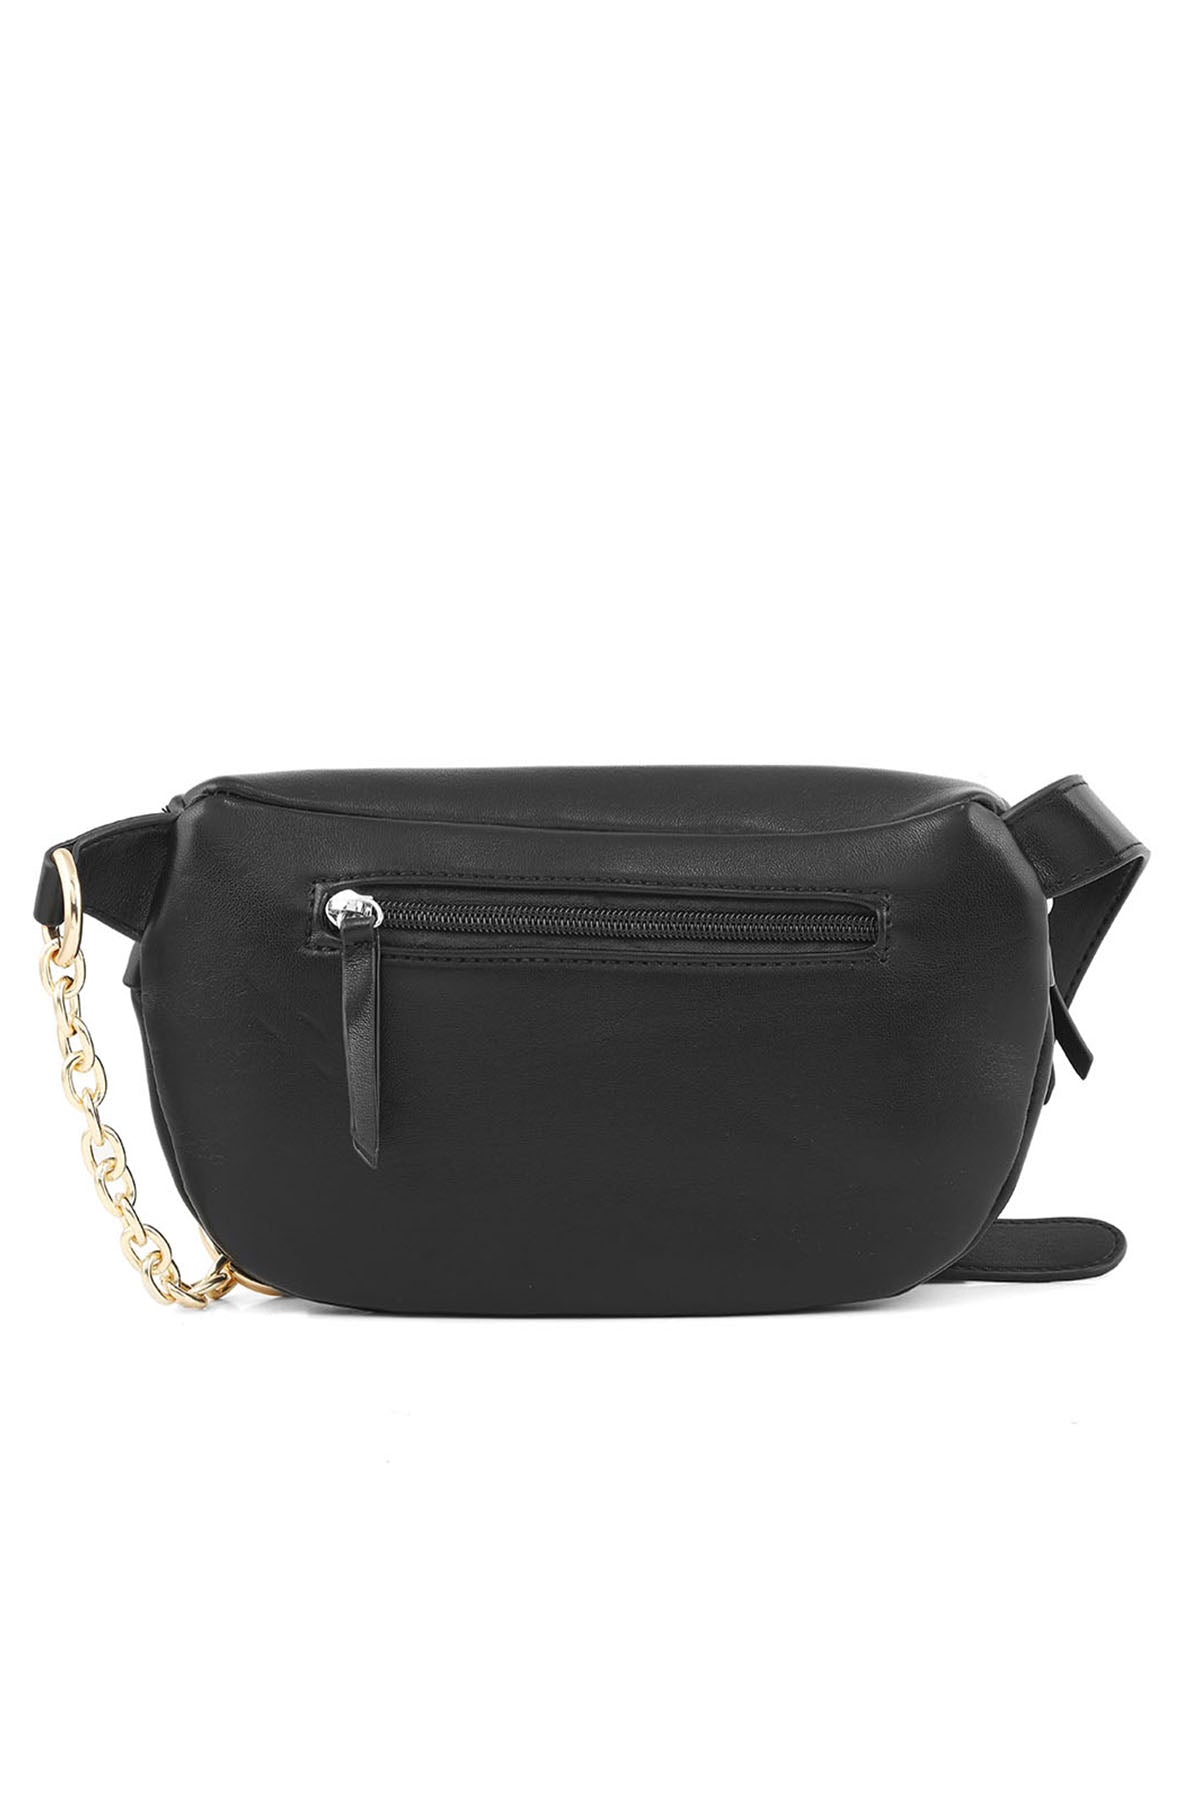 Feny Shoulder Bags B15060-Black